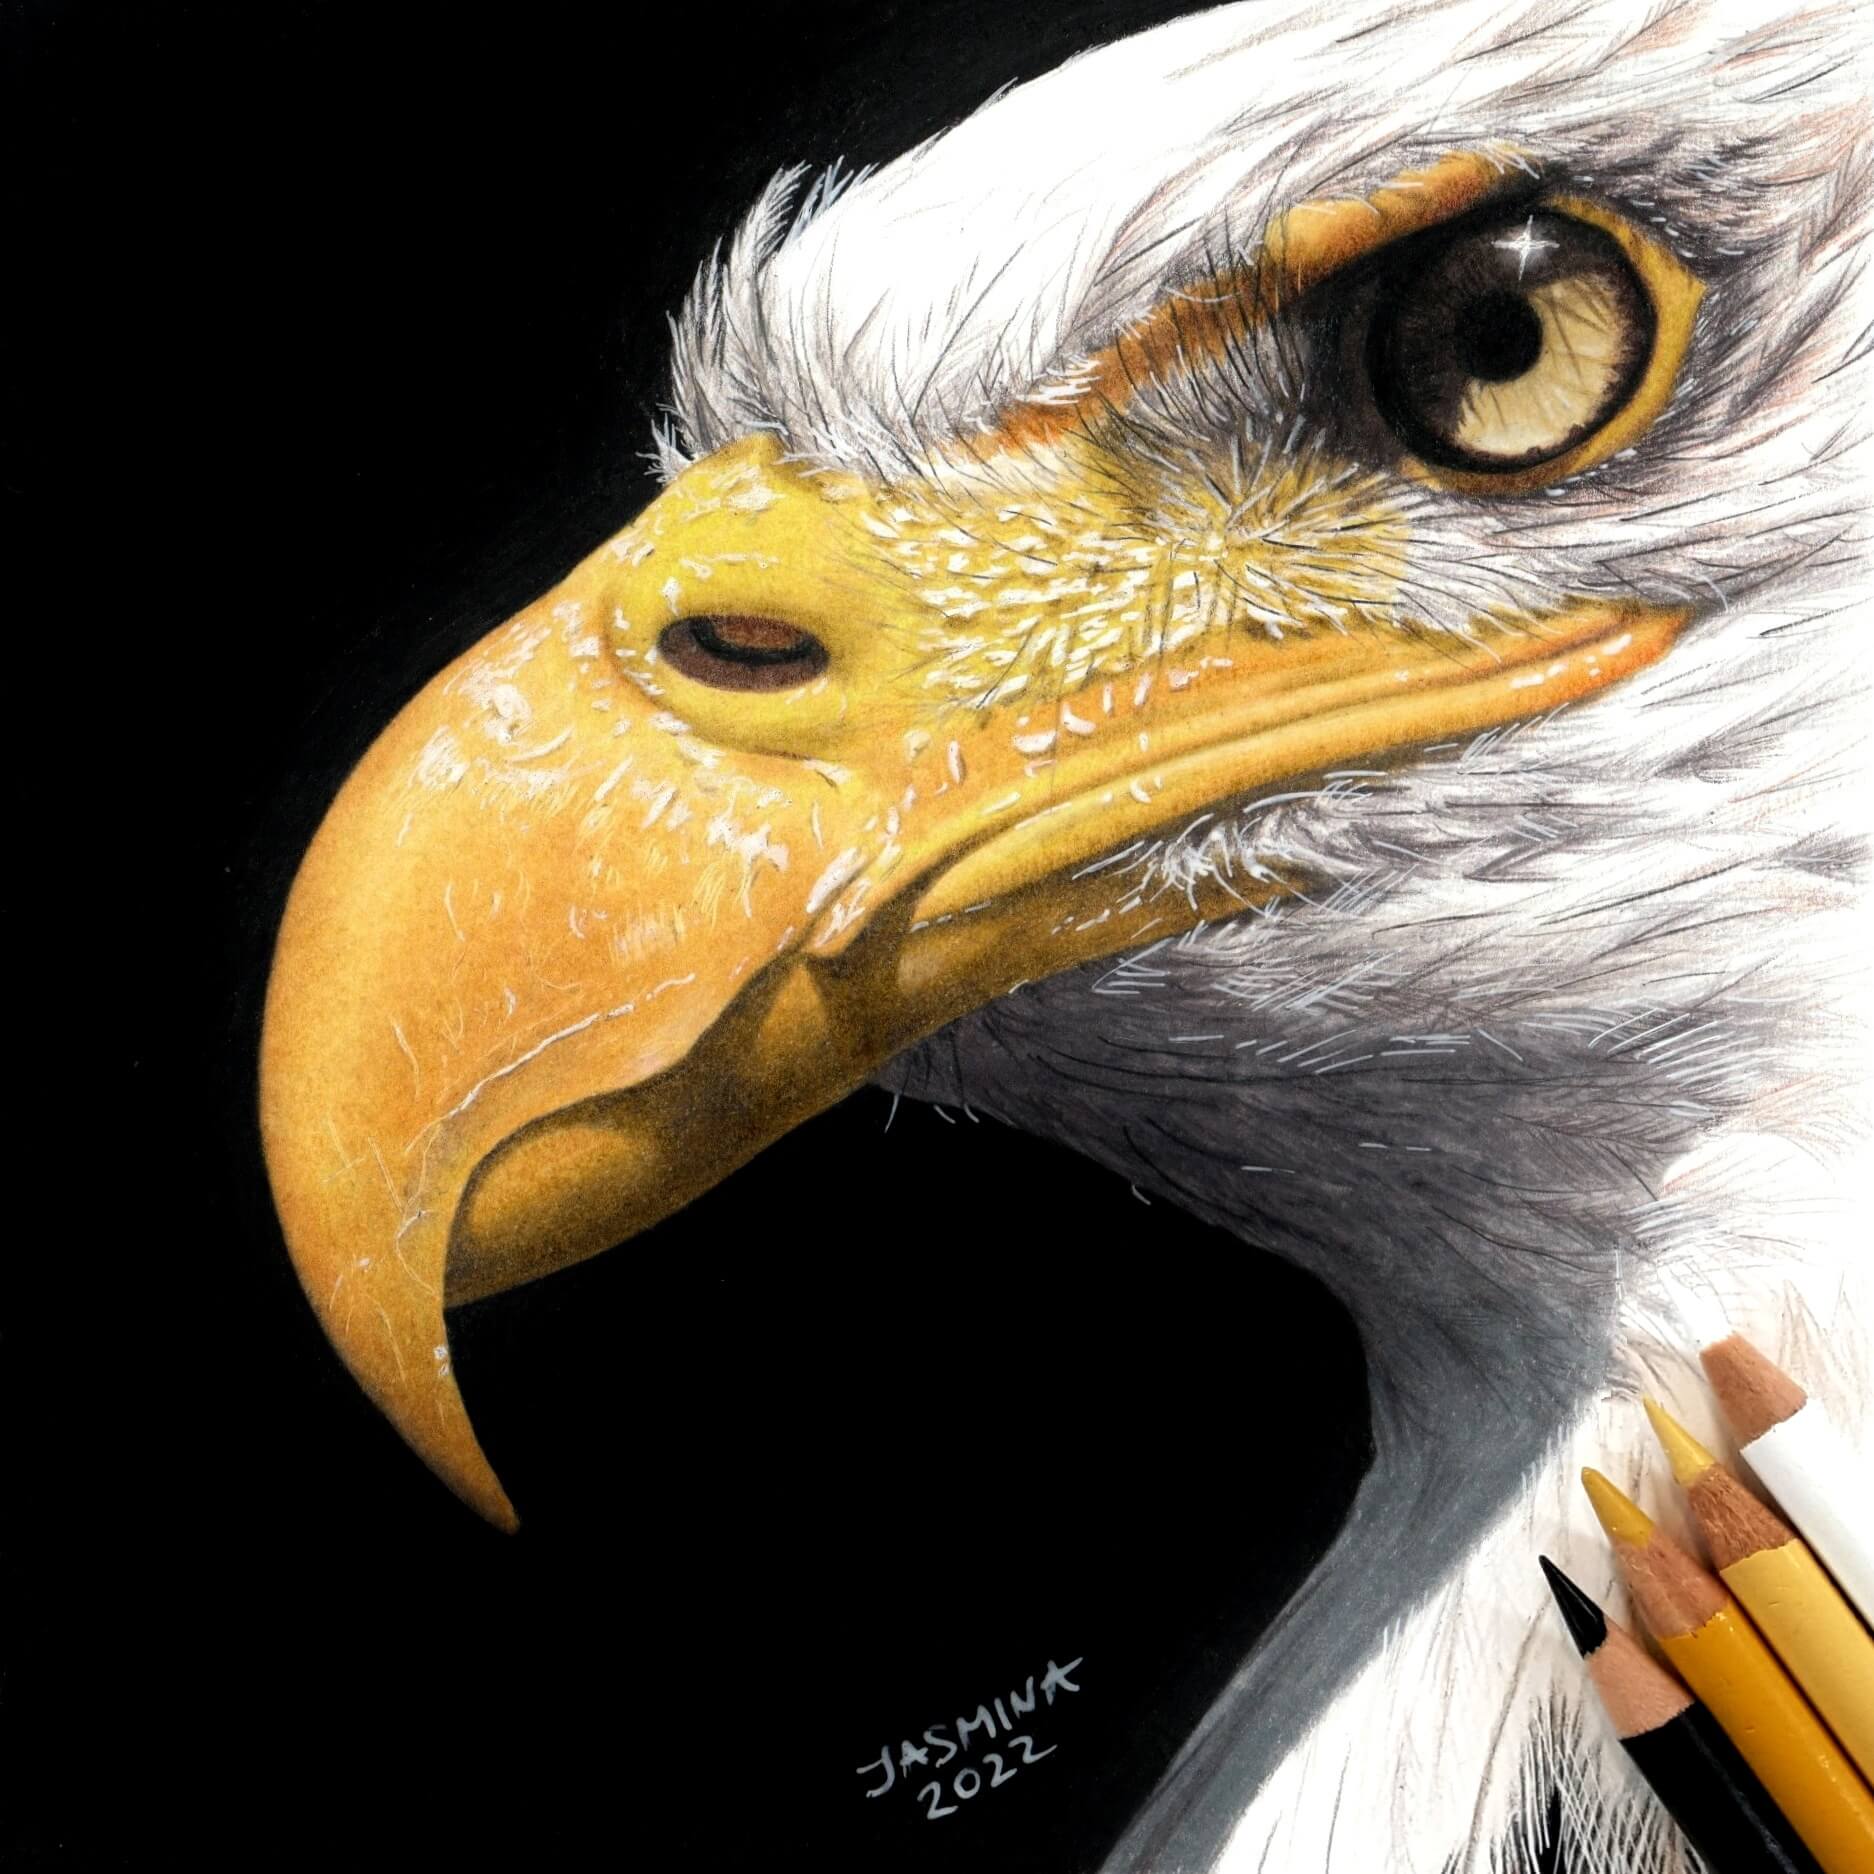 Photorealistic drawing by artist Jasmina Susak, representing an eagle.